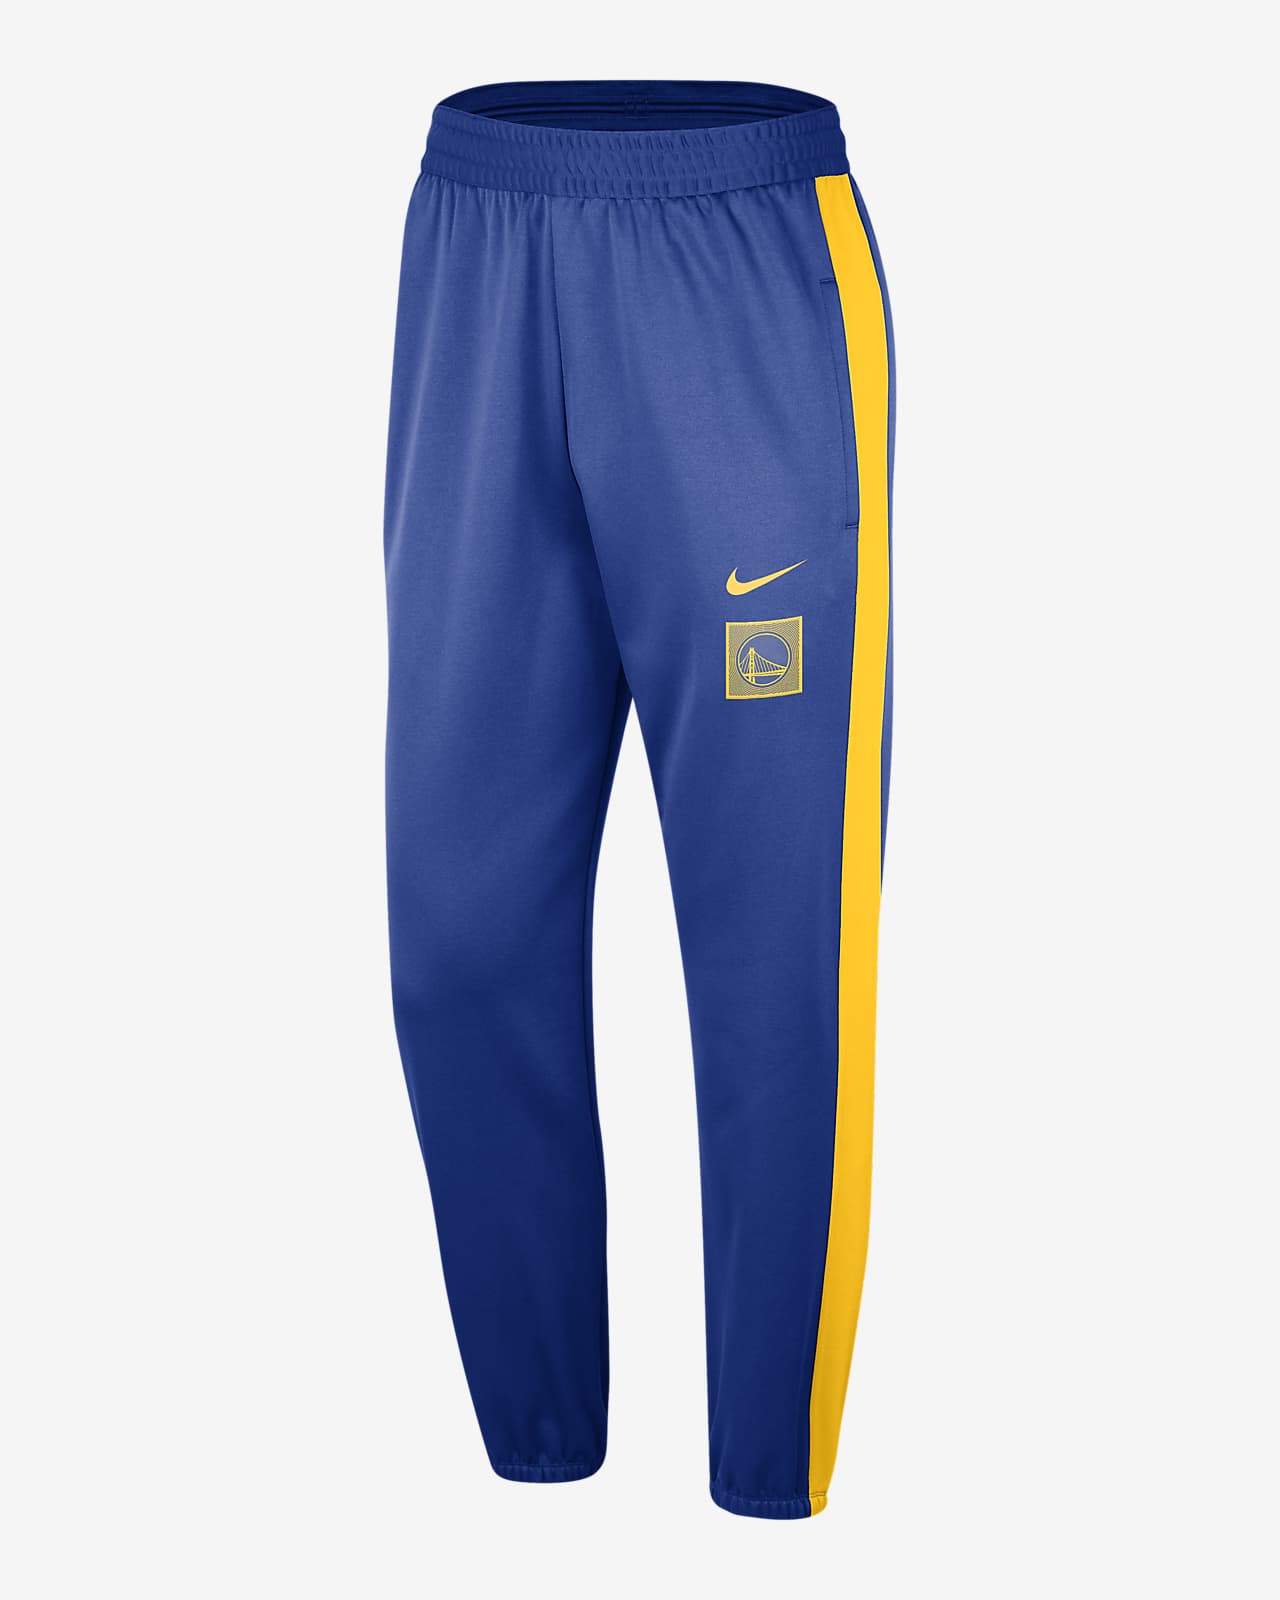 New Nike Pro NBA Zonal Strength Compression Pants Basketball Gold